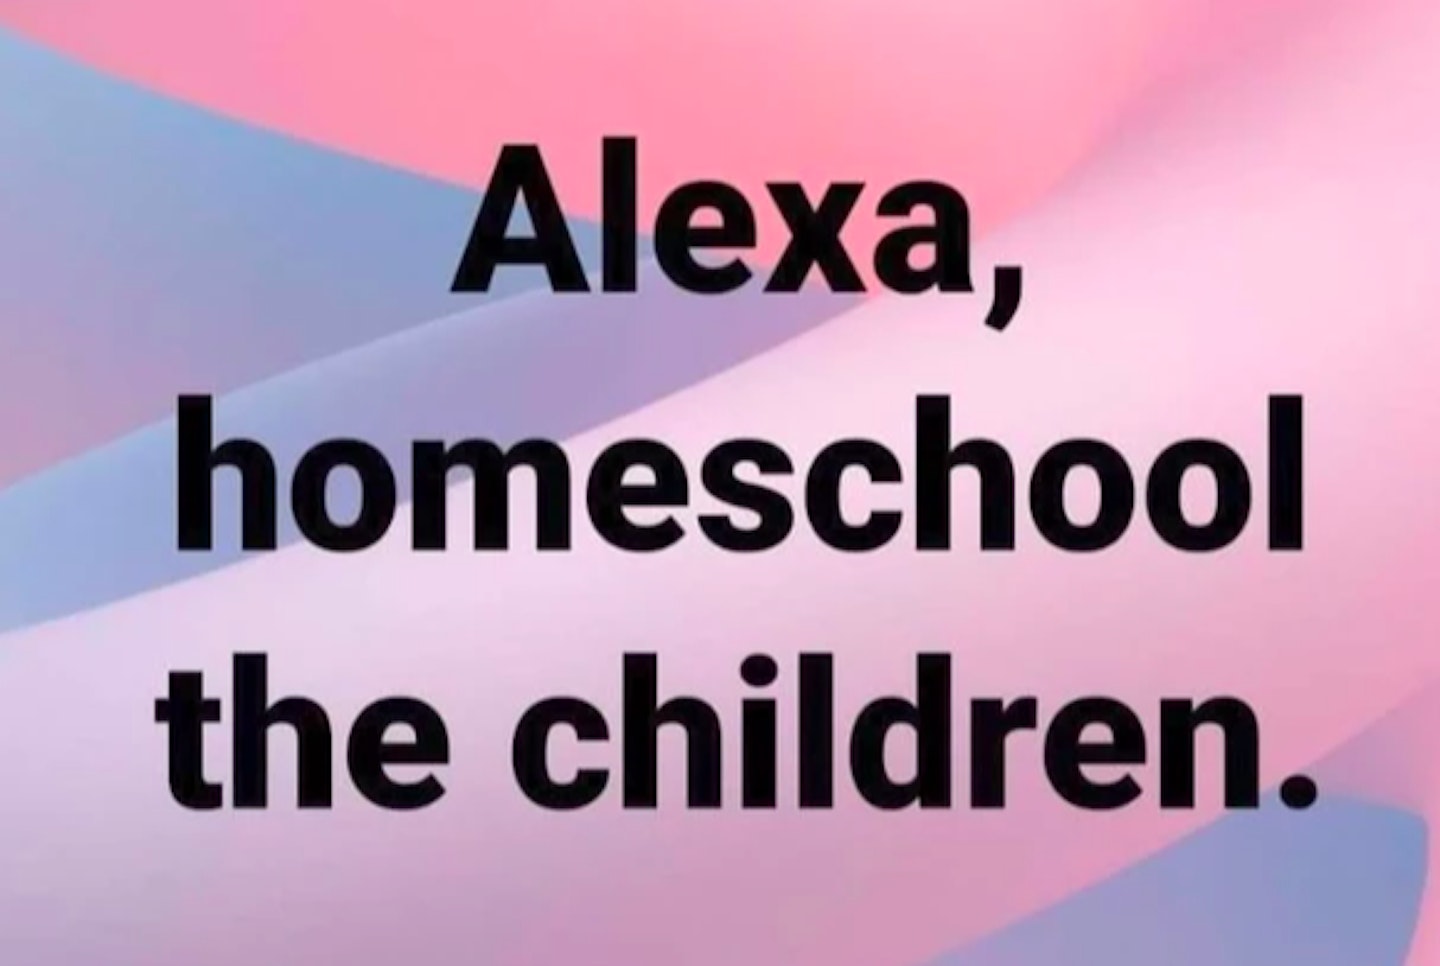 Homeschooling Memes - Grazia